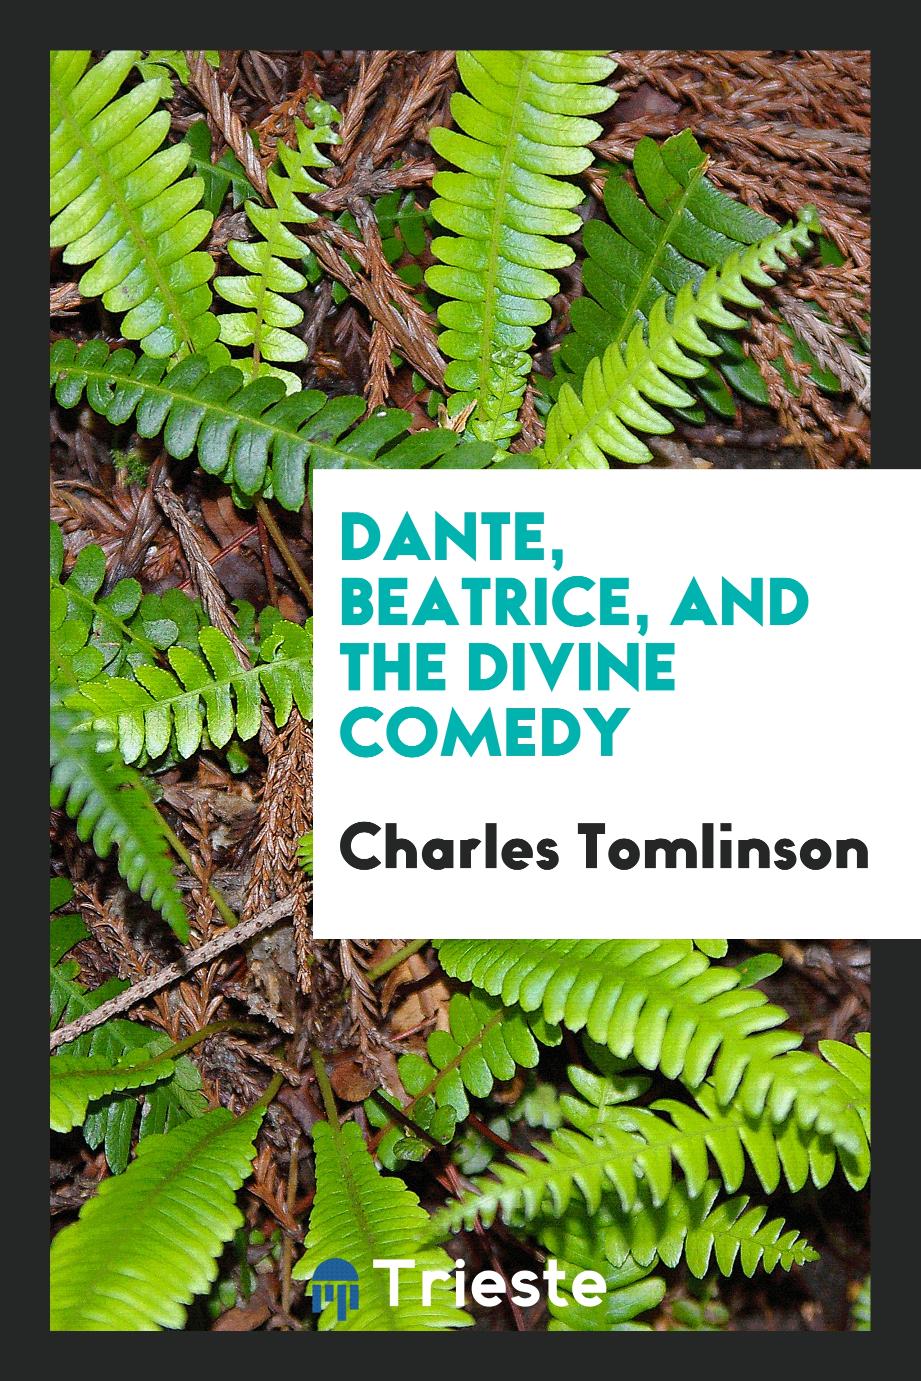 Dante, Beatrice, and the Divine Comedy